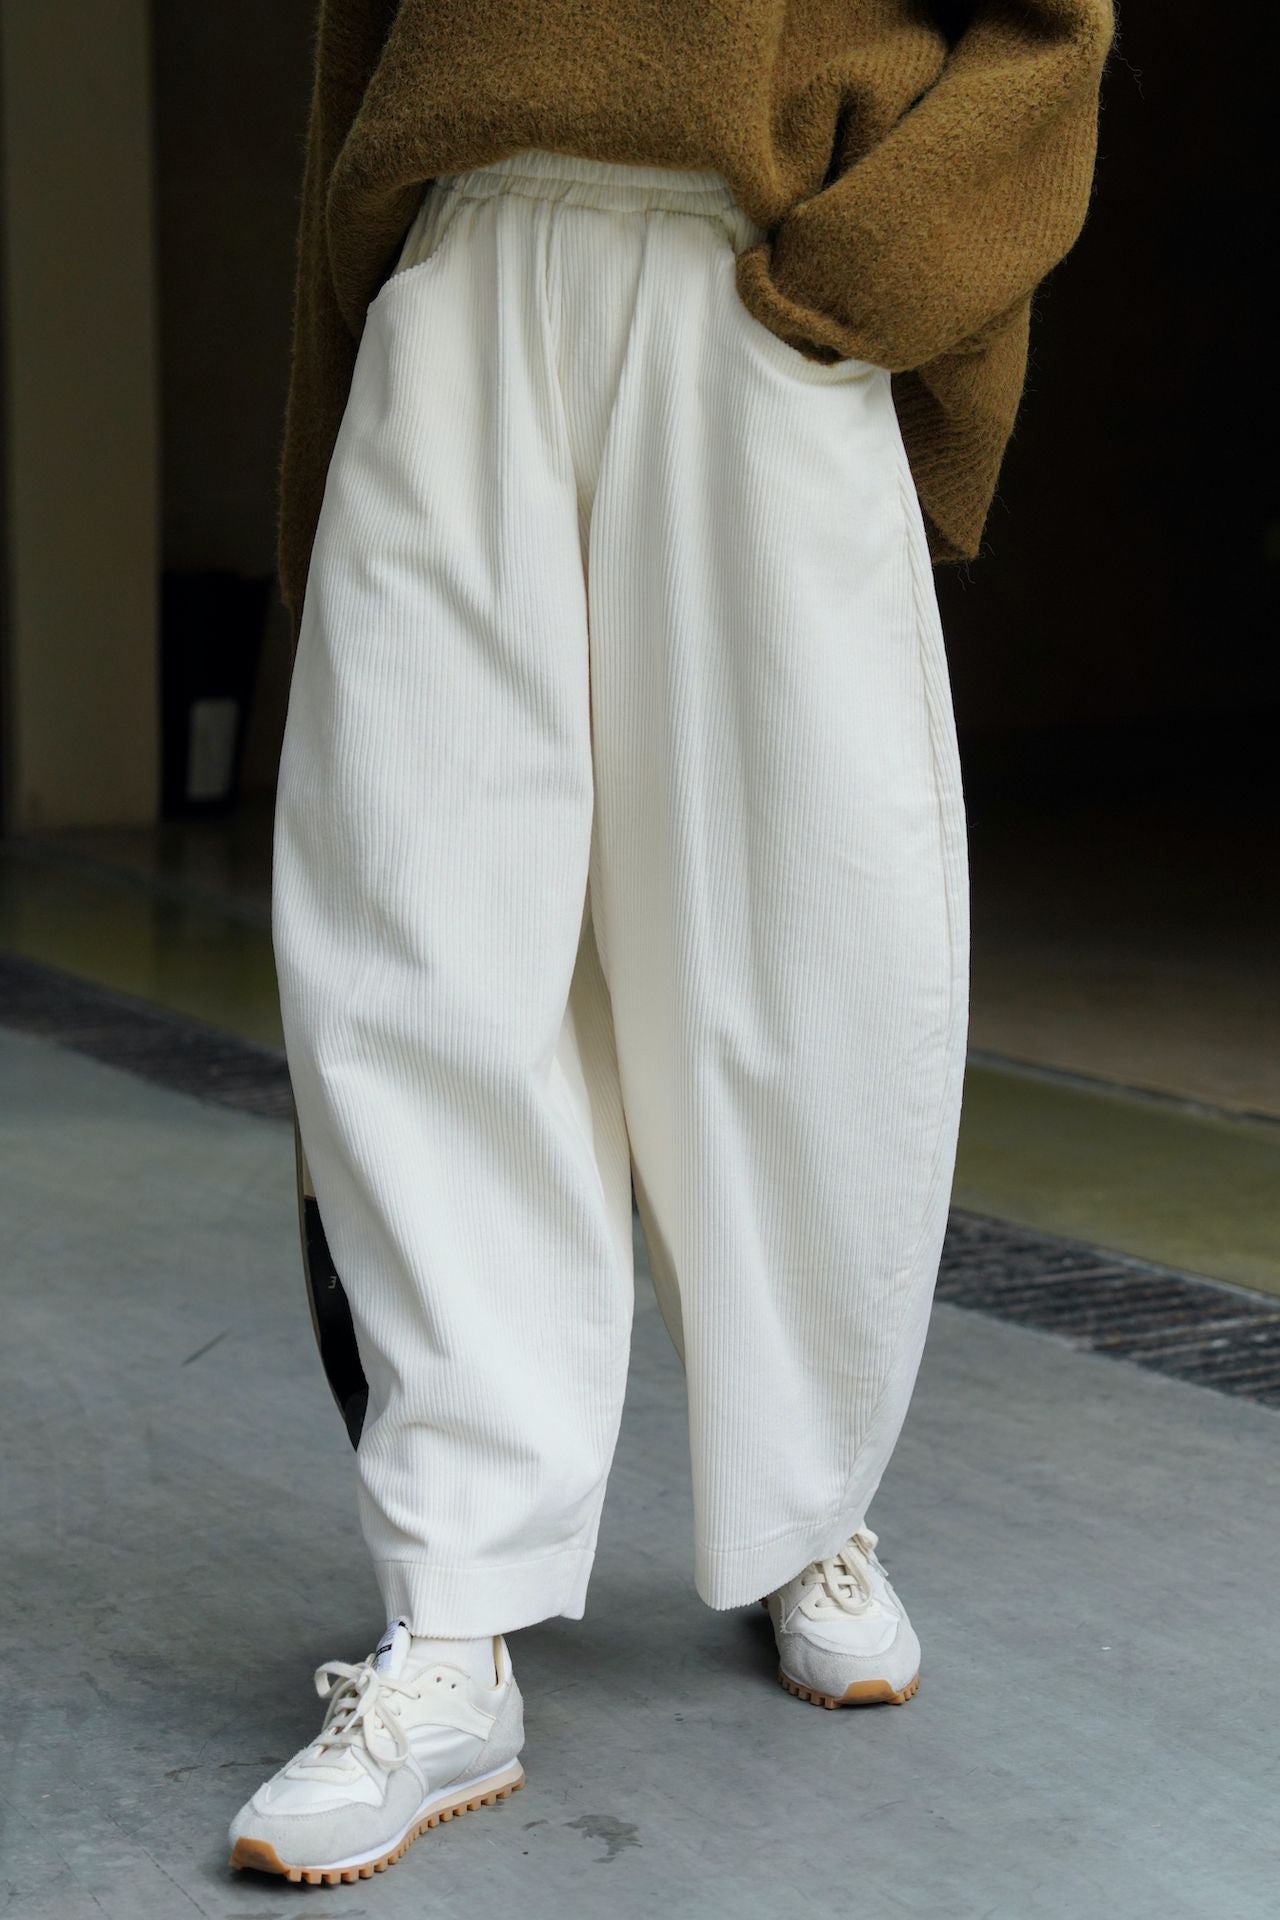 Trendy Men's Aladdin Pants Loose Balloon Trousers for Everyday Comfort |  eBay